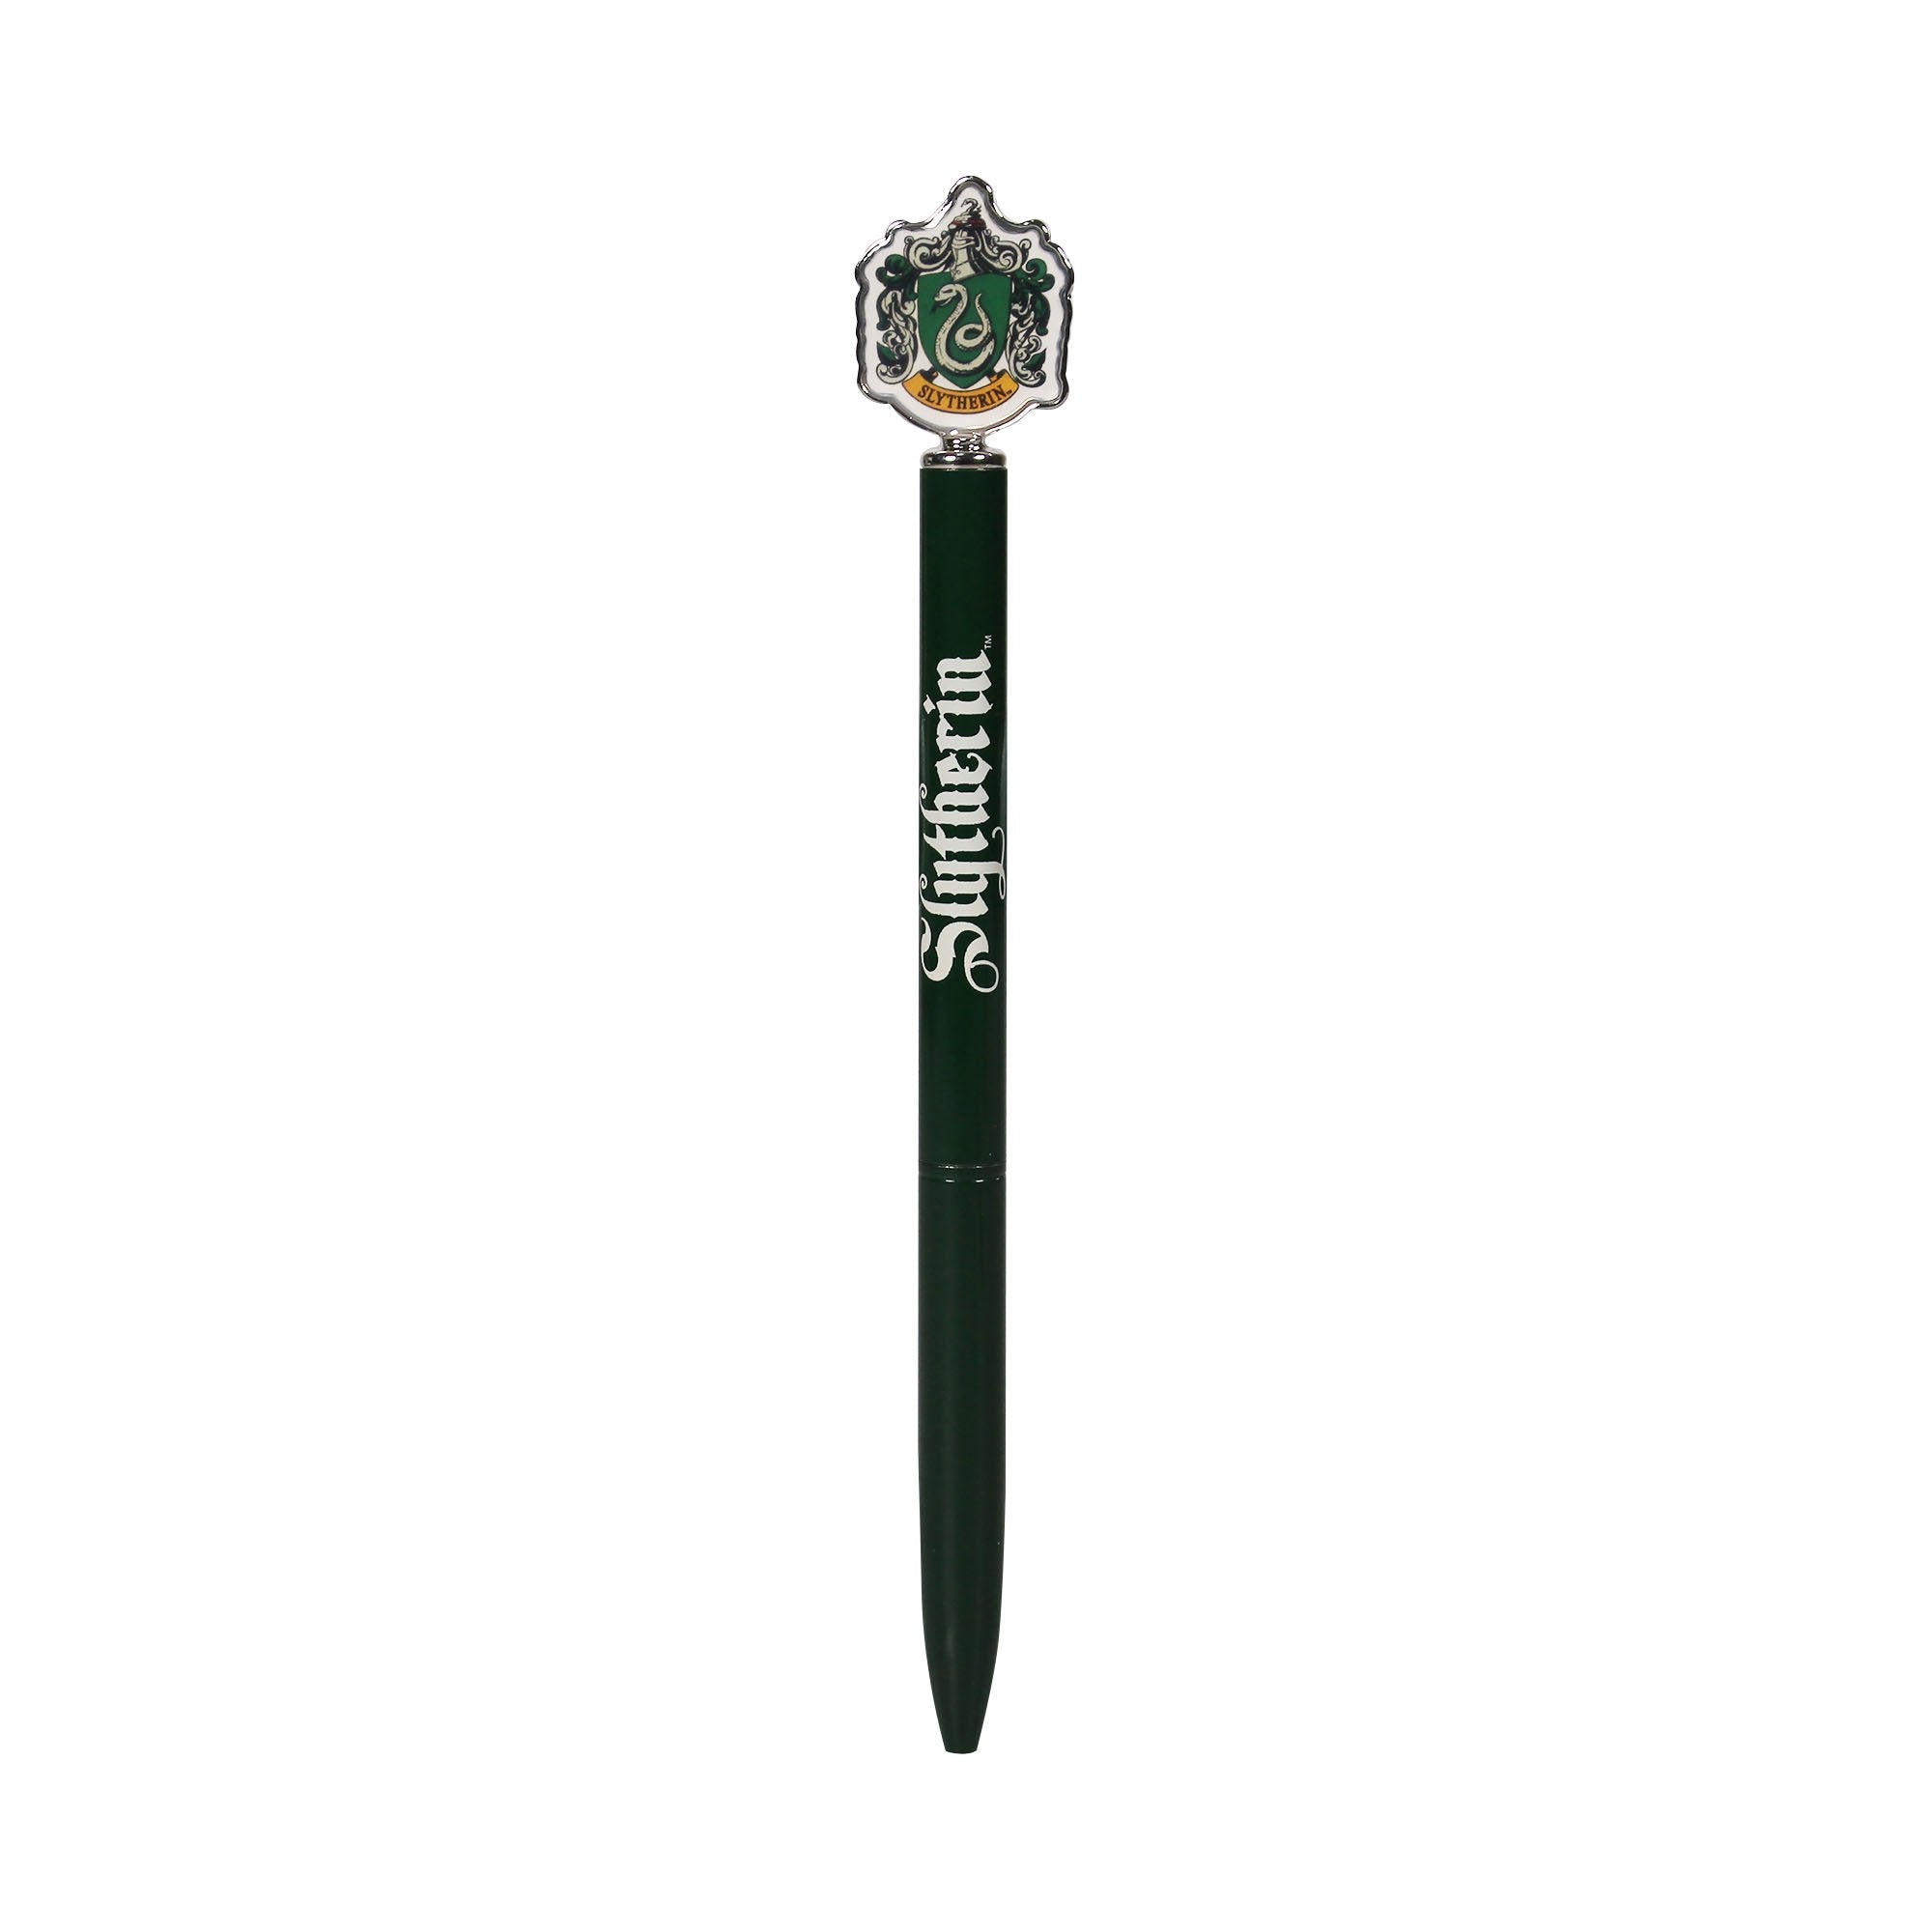 Pen Metal 2D Shaped Topper - Harry Potter (Slytherin)